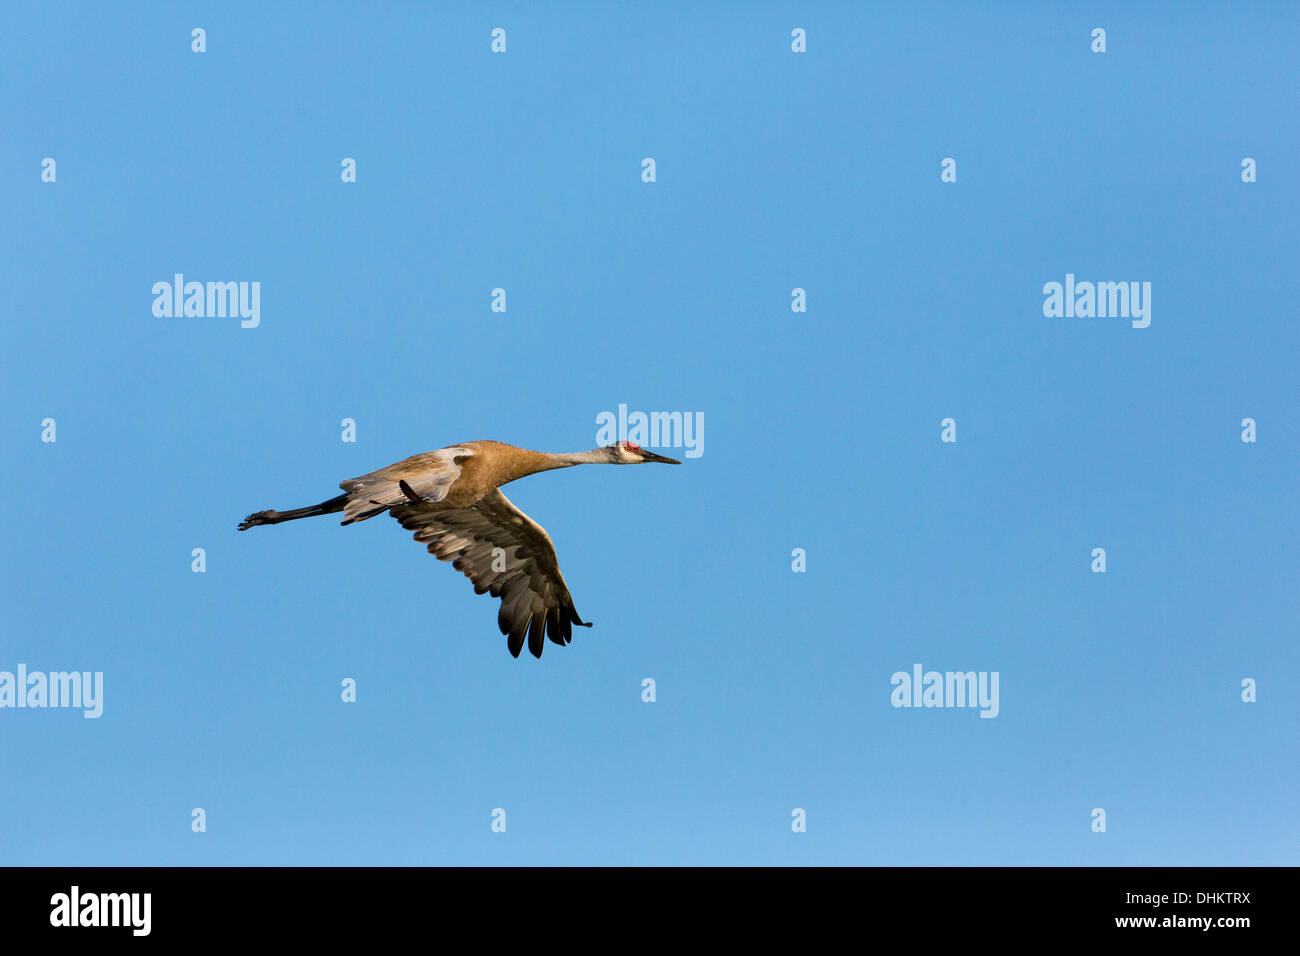 Sandhill crane flying Stock Photo